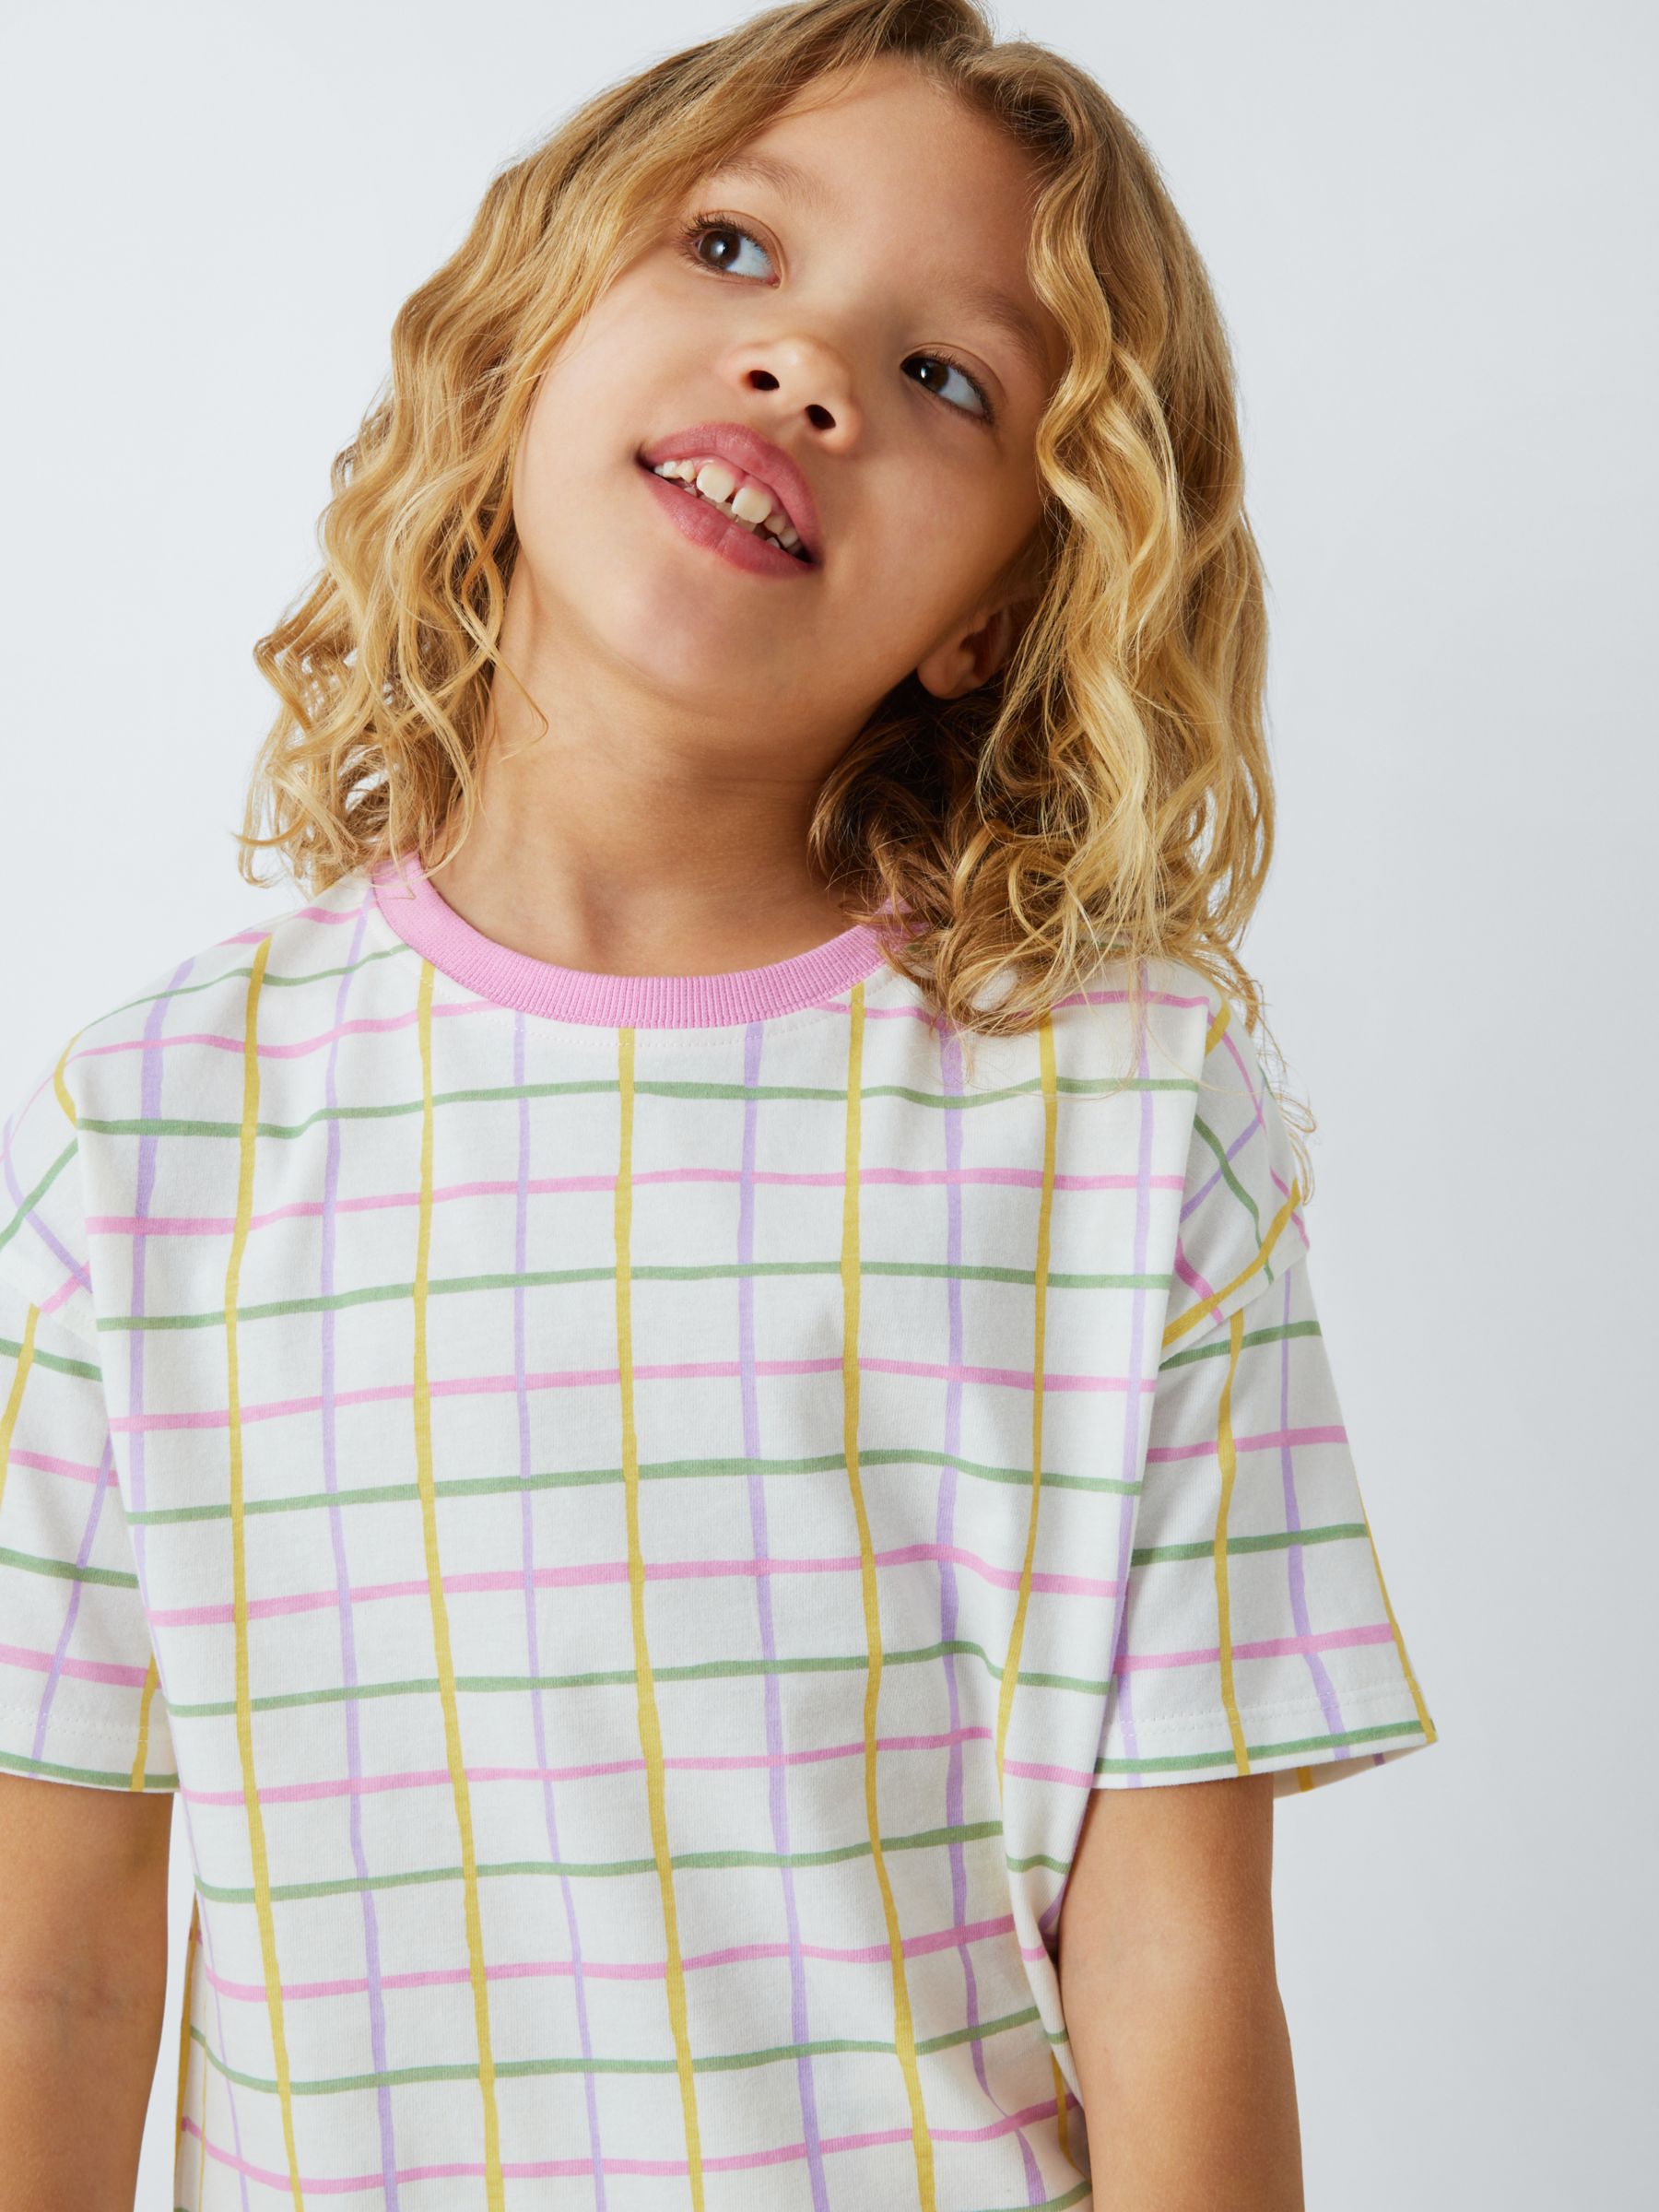 John Lewis ANYDAY Kids' Gardenia Check Print Shorts Pyjamas, Multi, 9 years